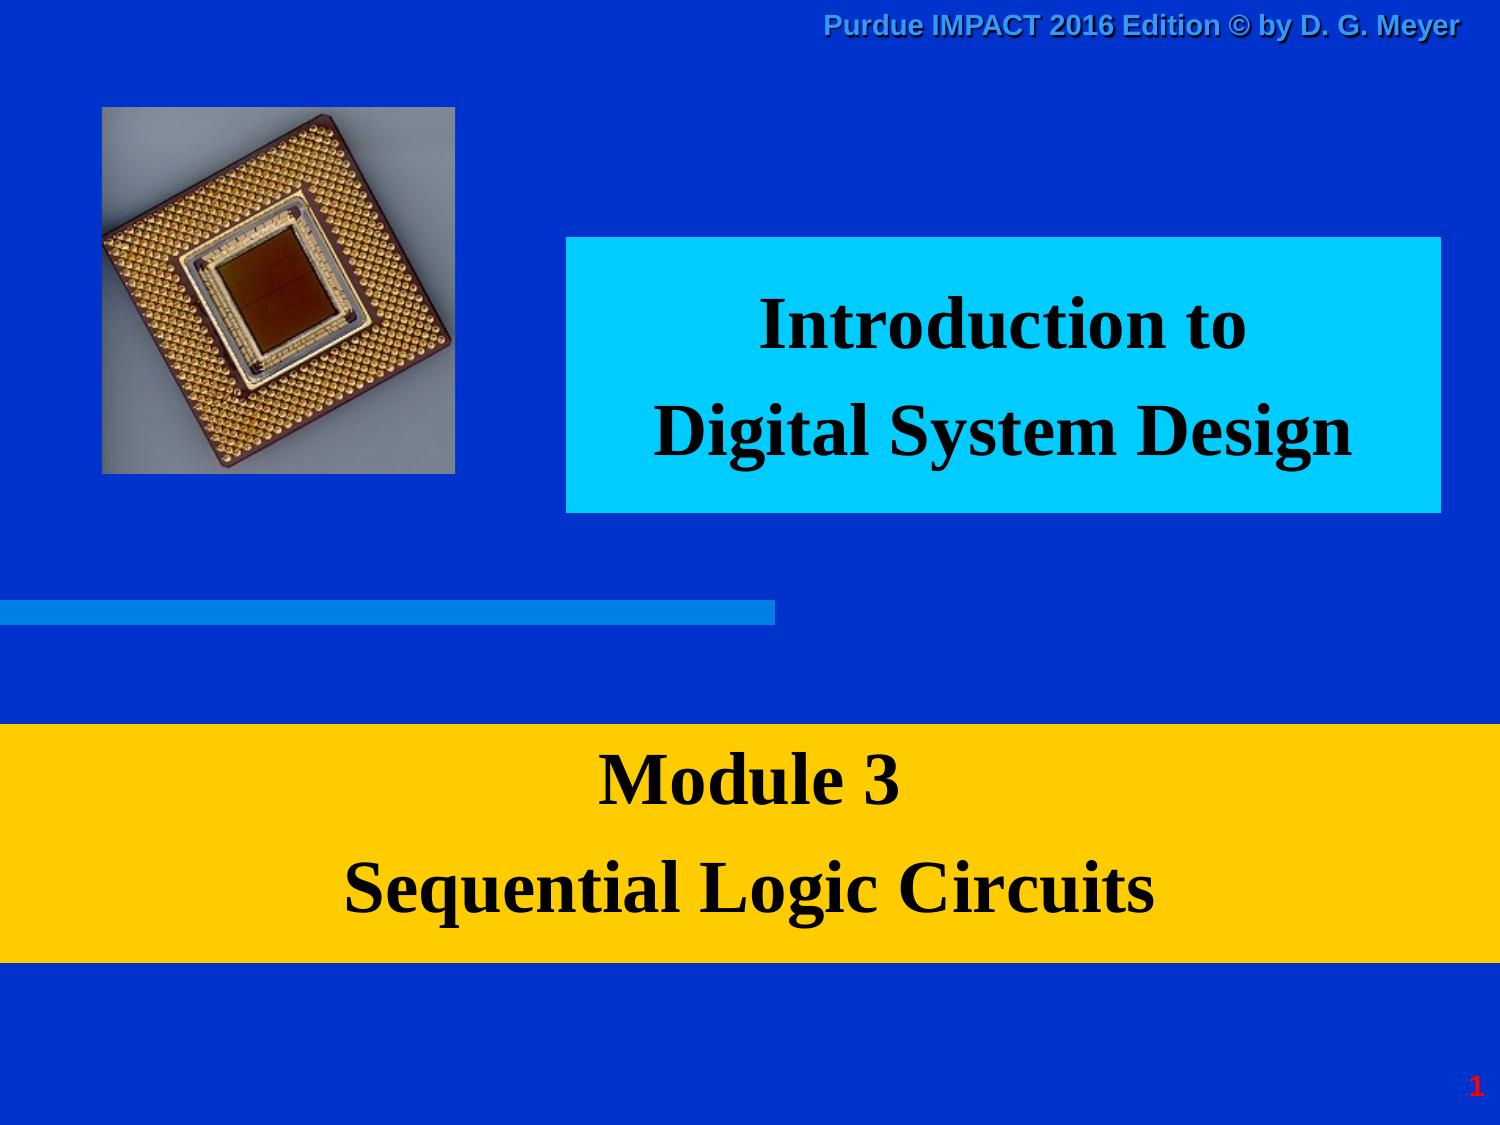 Module 3 Class Presentation Slides